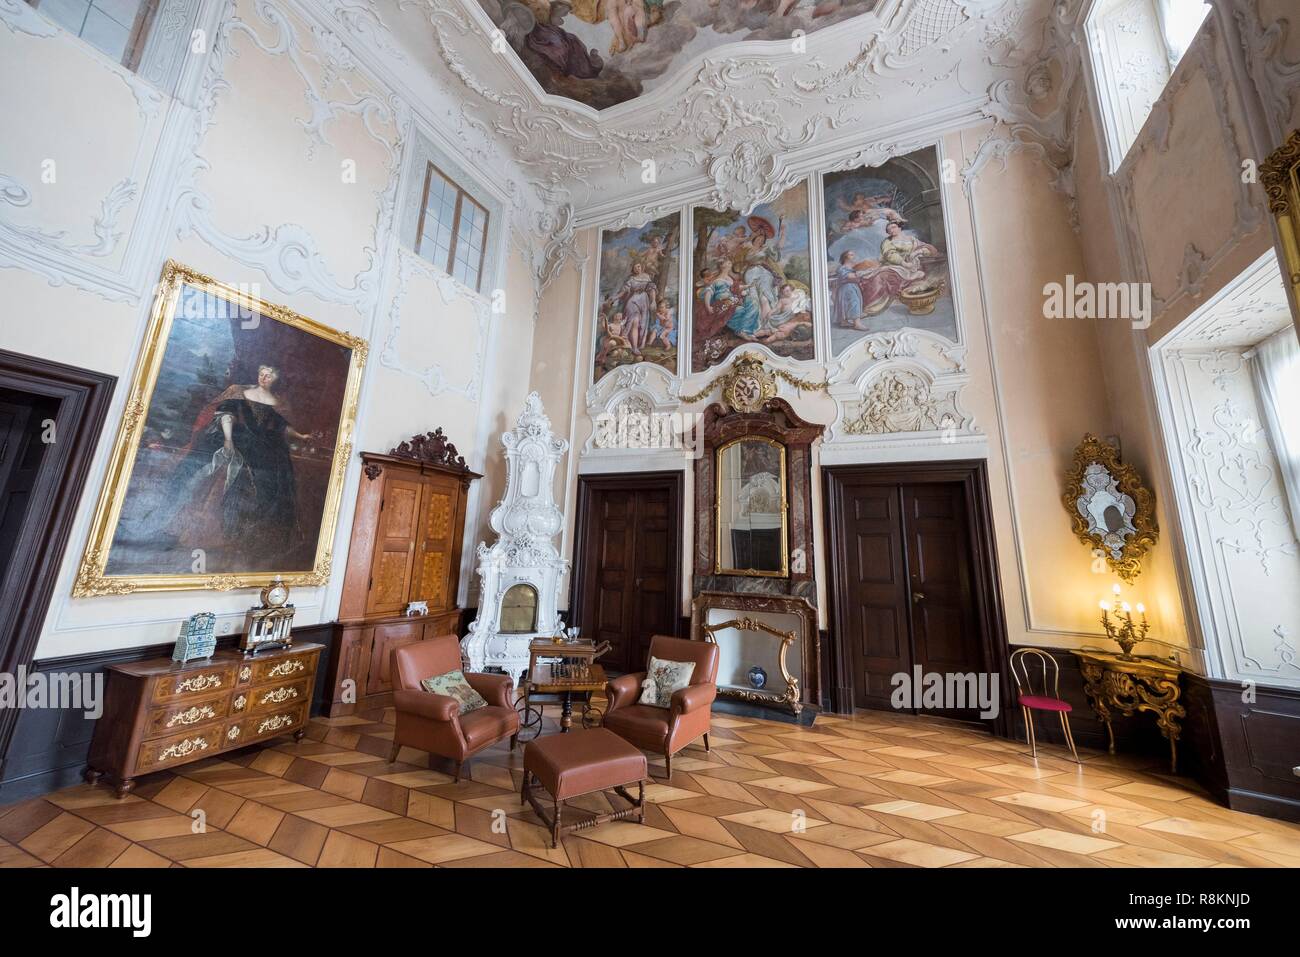 Czech Republic, Central Bohemia, Jemniste, Jemniste Castle, drawing room interior Stock Photo